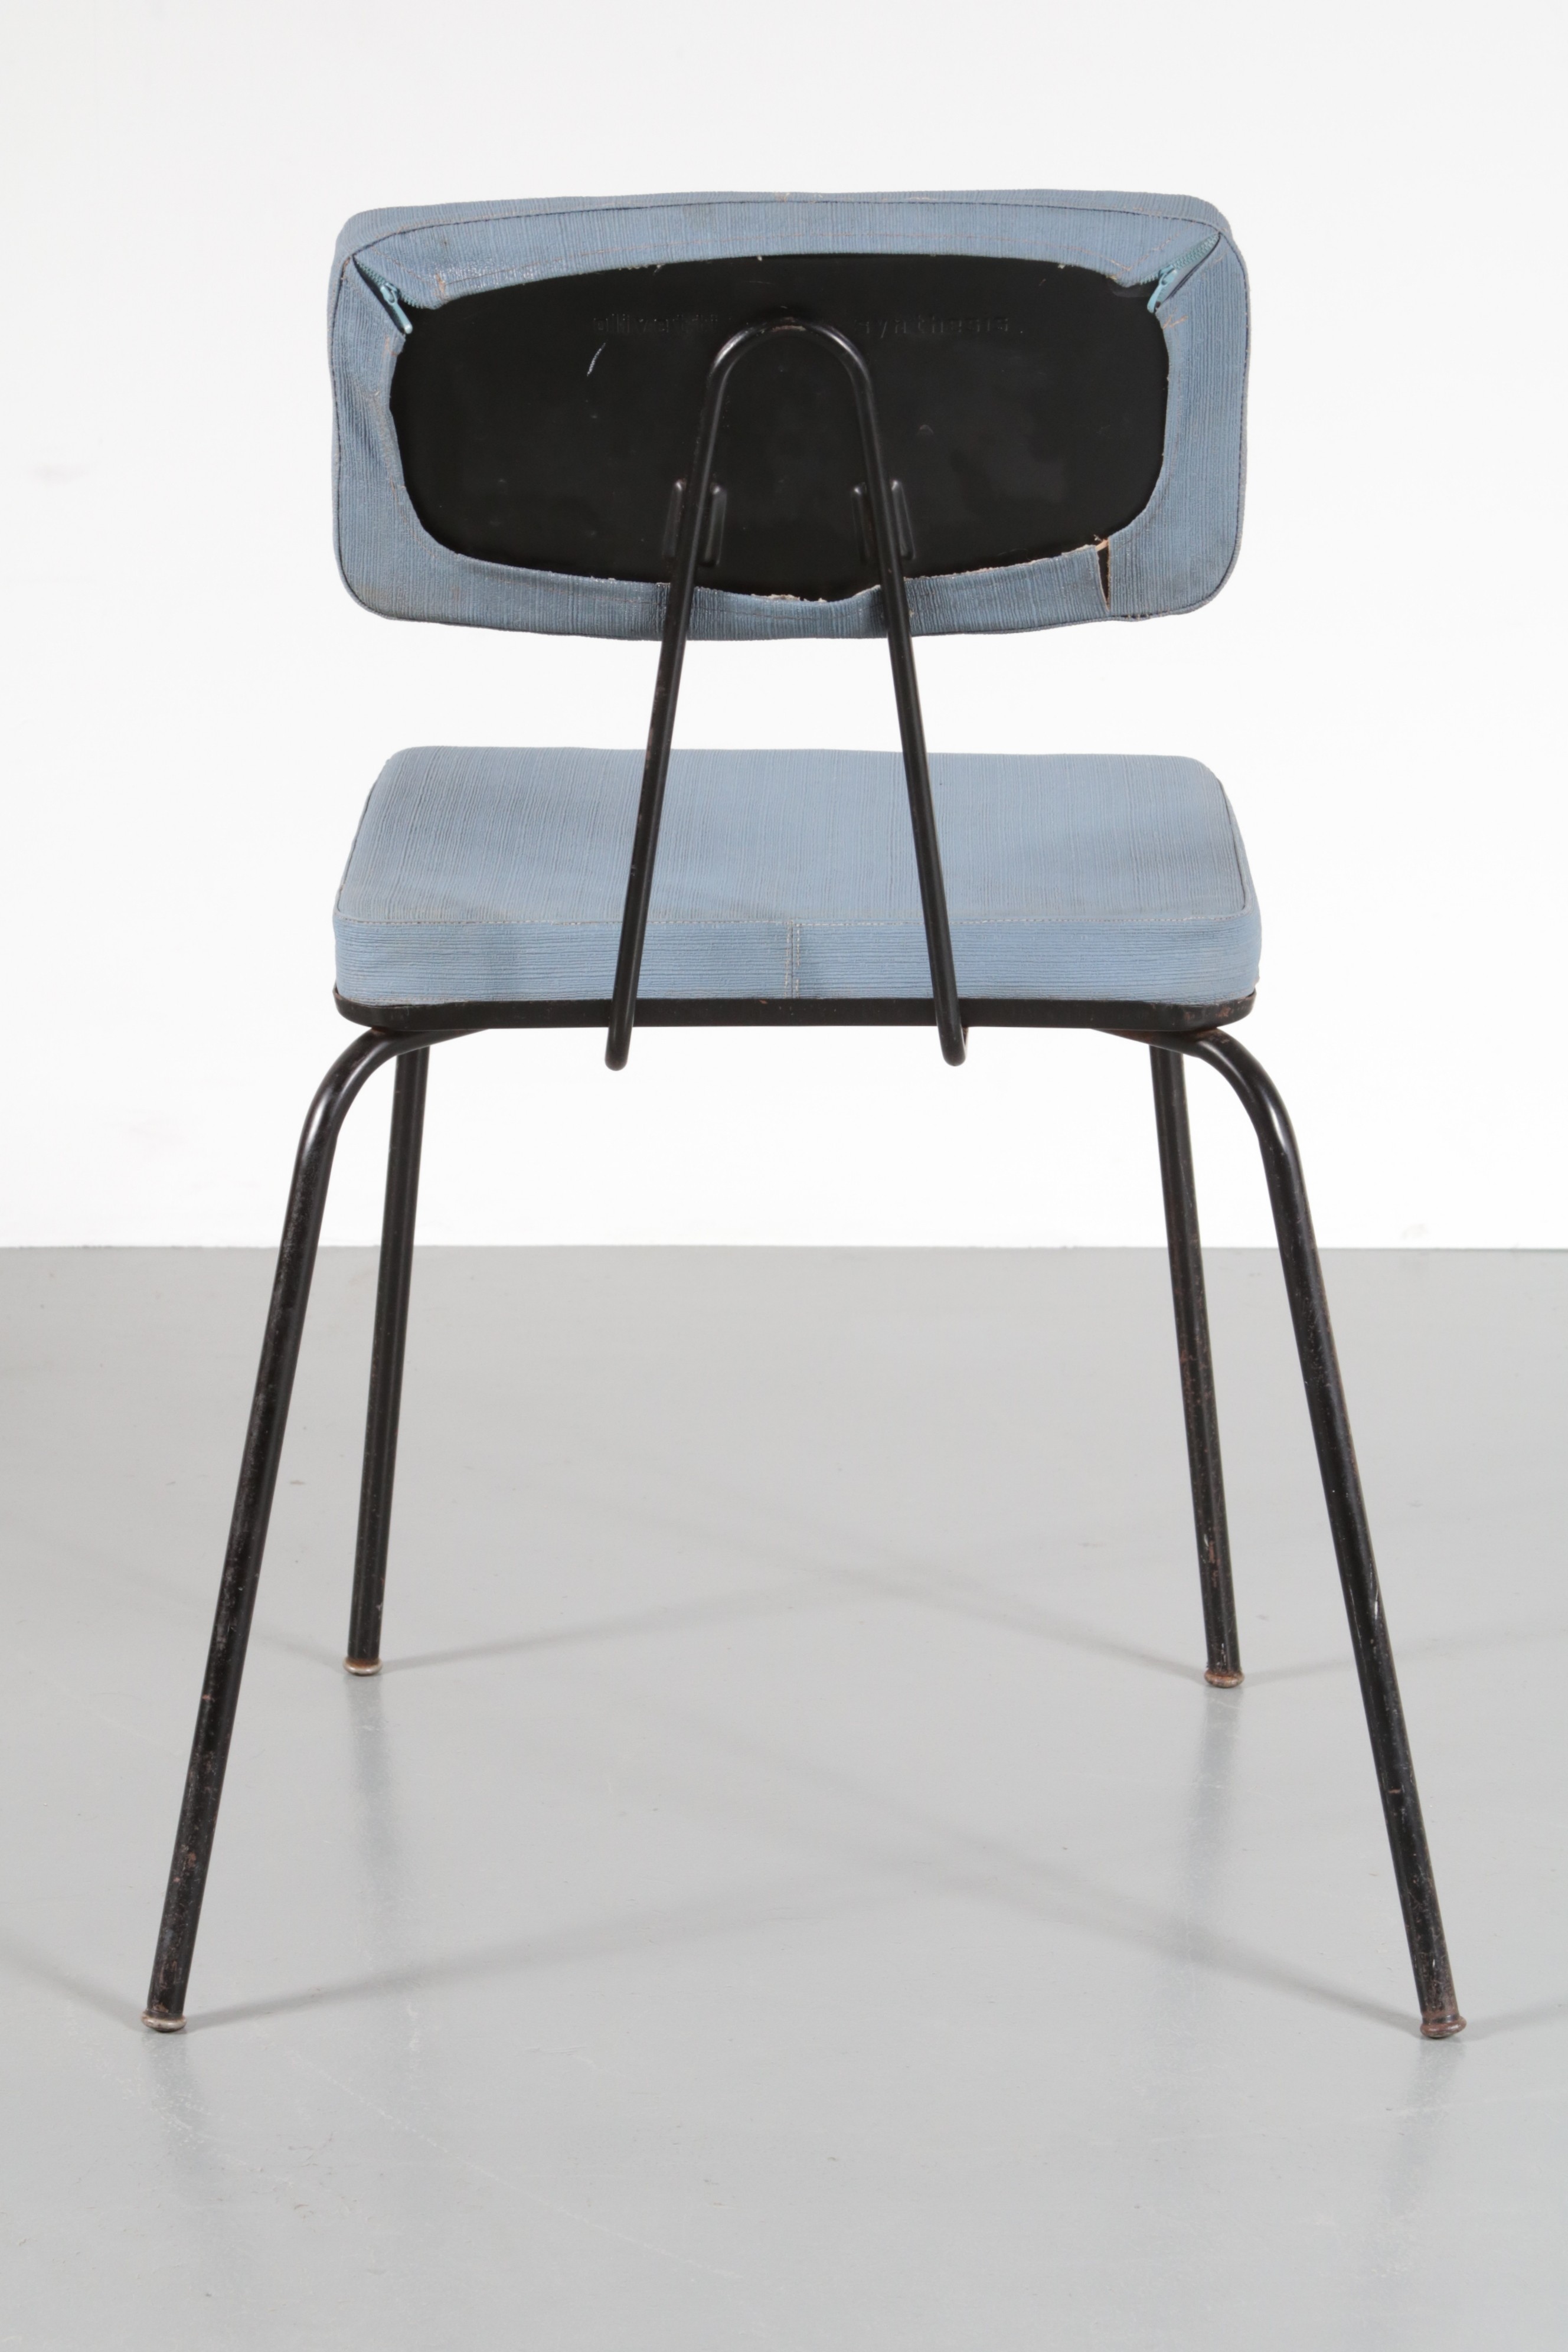 iMinimalist desk chairi by Studio BBPR 1960s Design Market